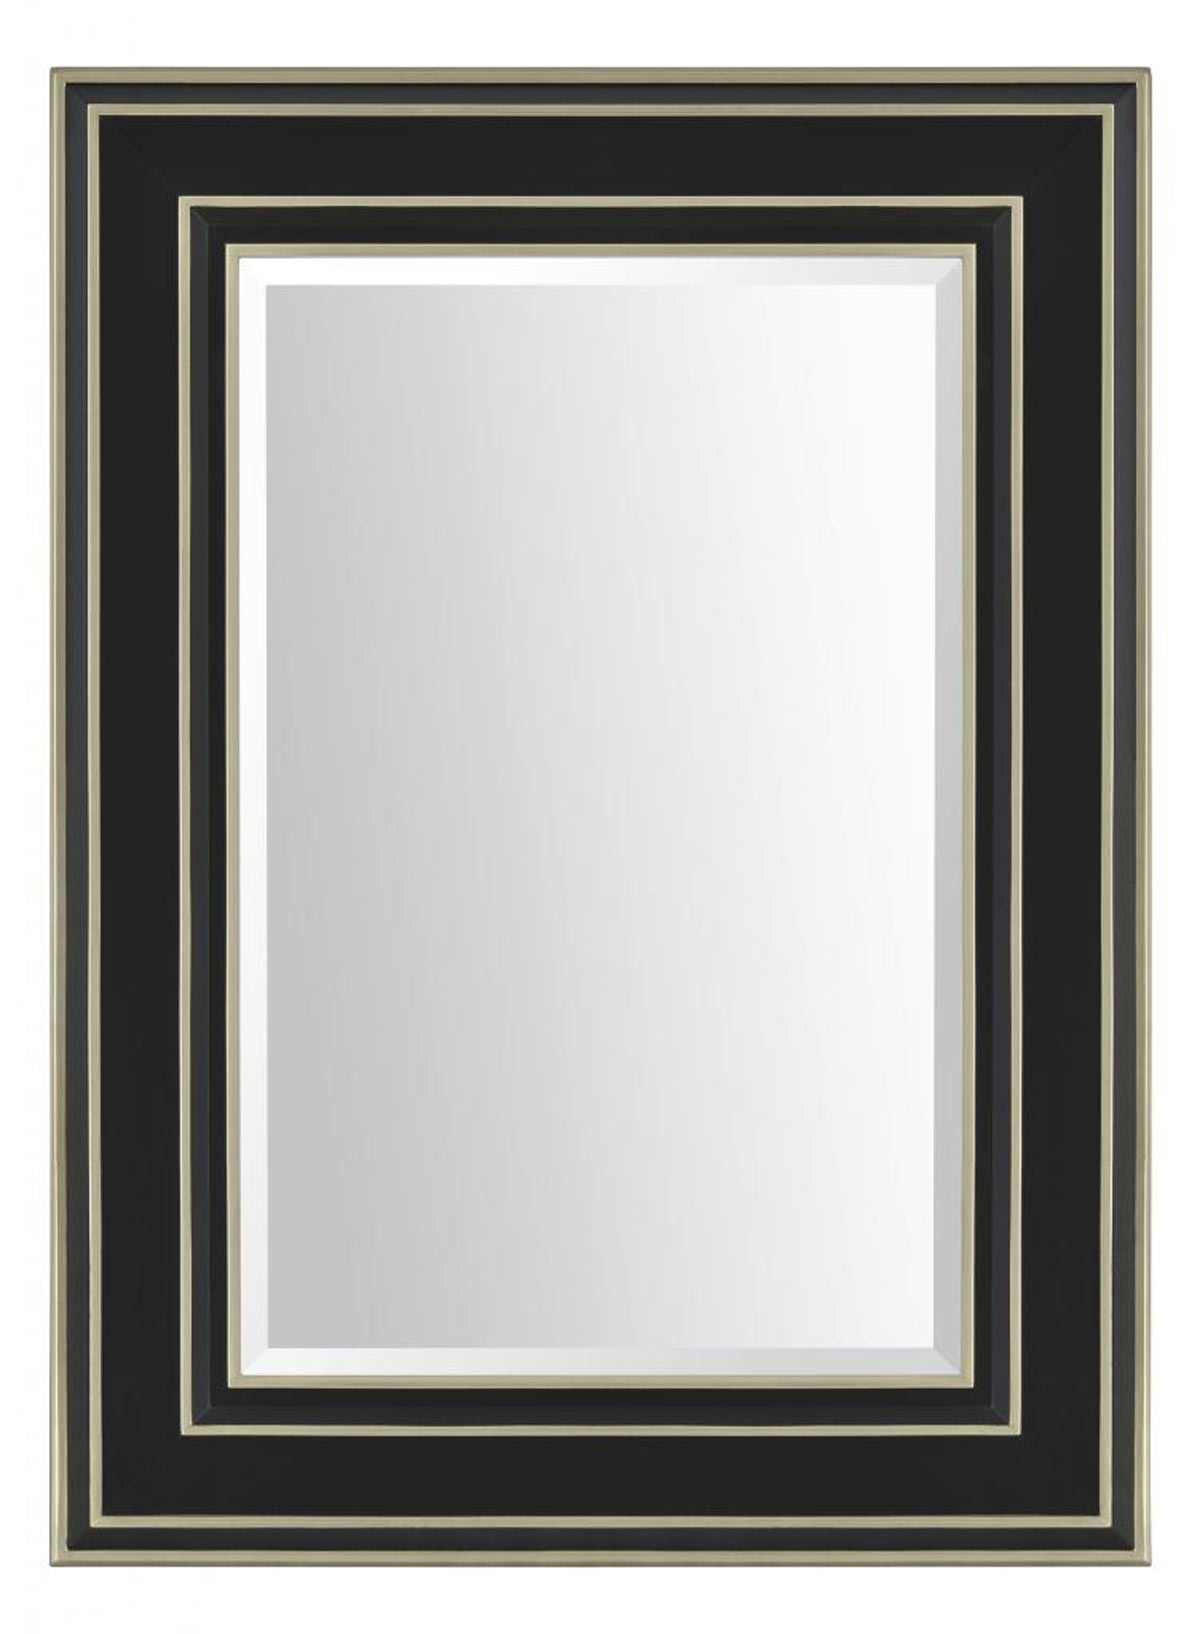 Ren-Wil Chaplin Mirror - Silver leaf on Black frame